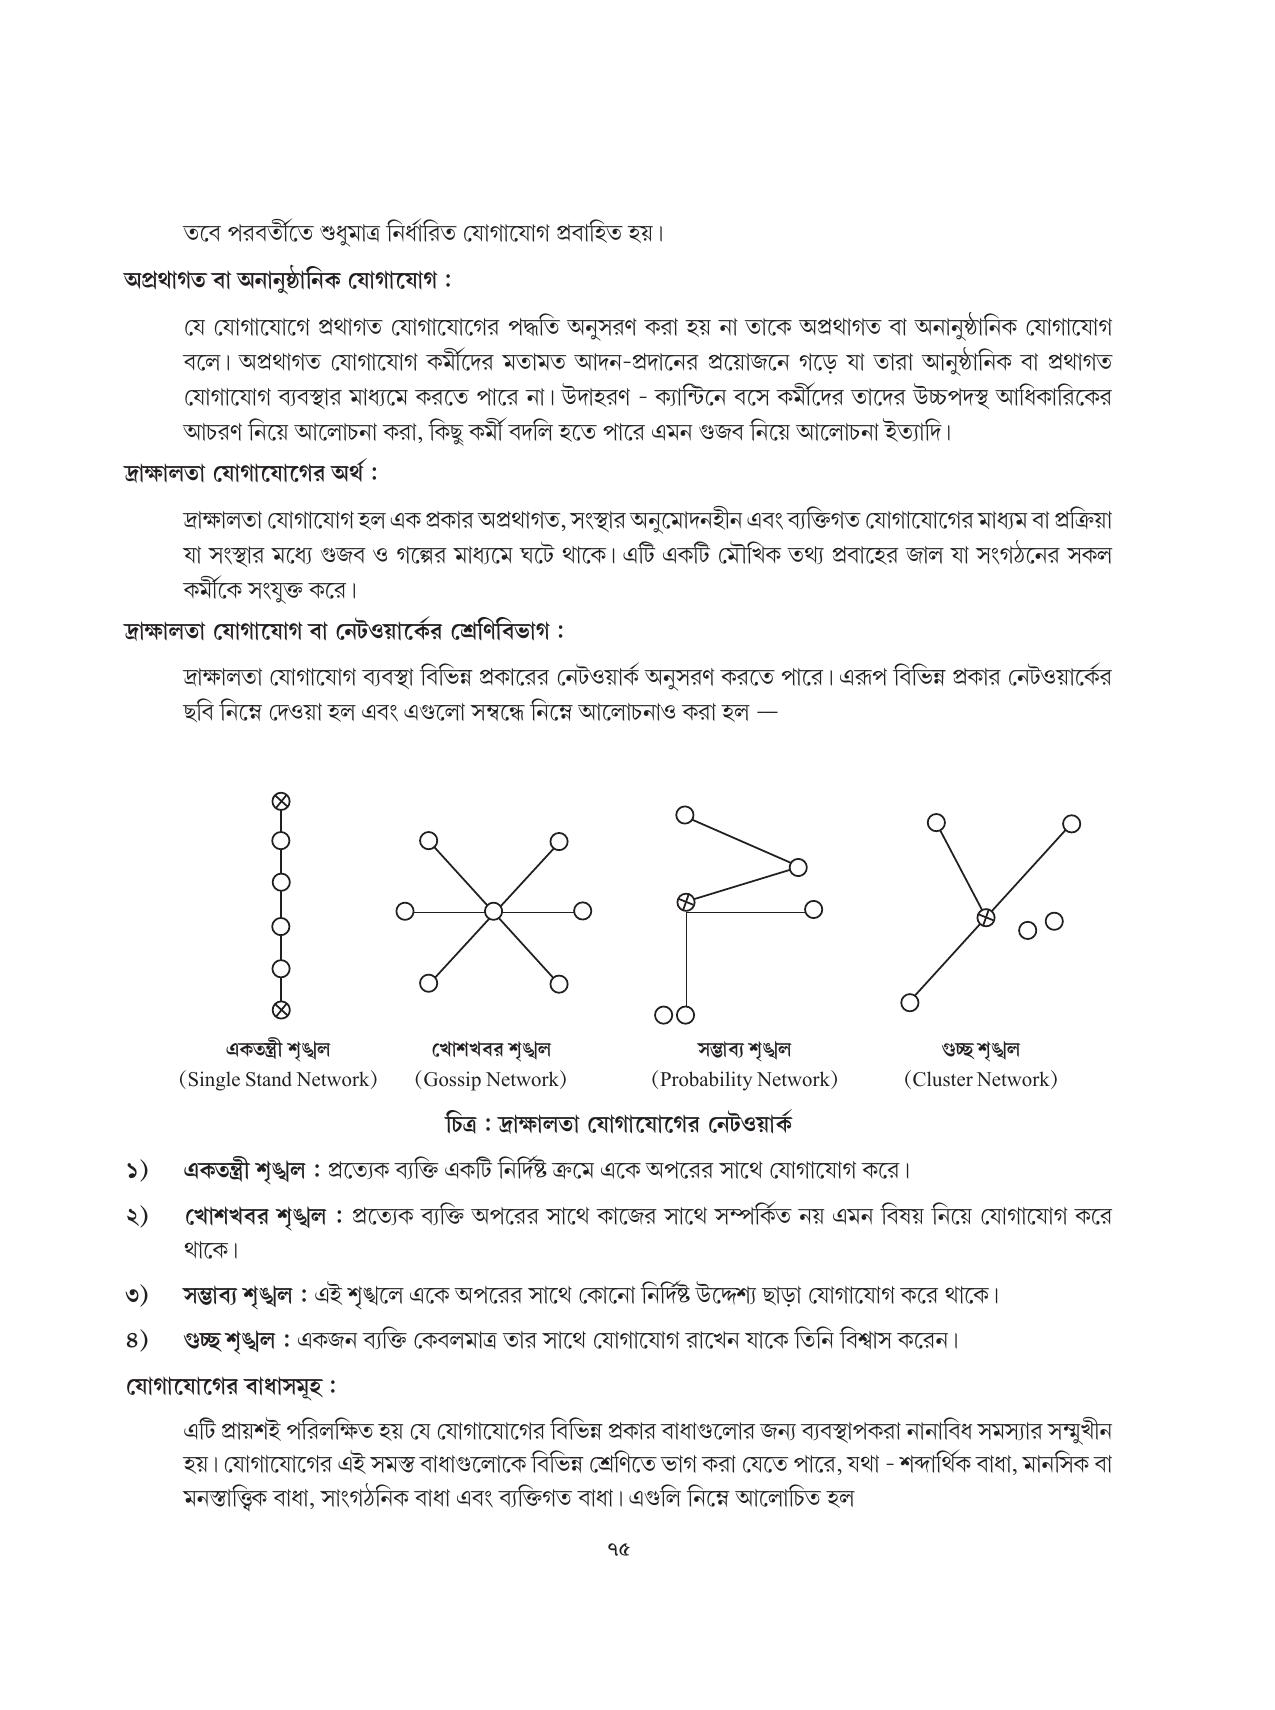 Tripura Board Class 12 Karbari Shastra Bengali Version Workbooks - Page 75